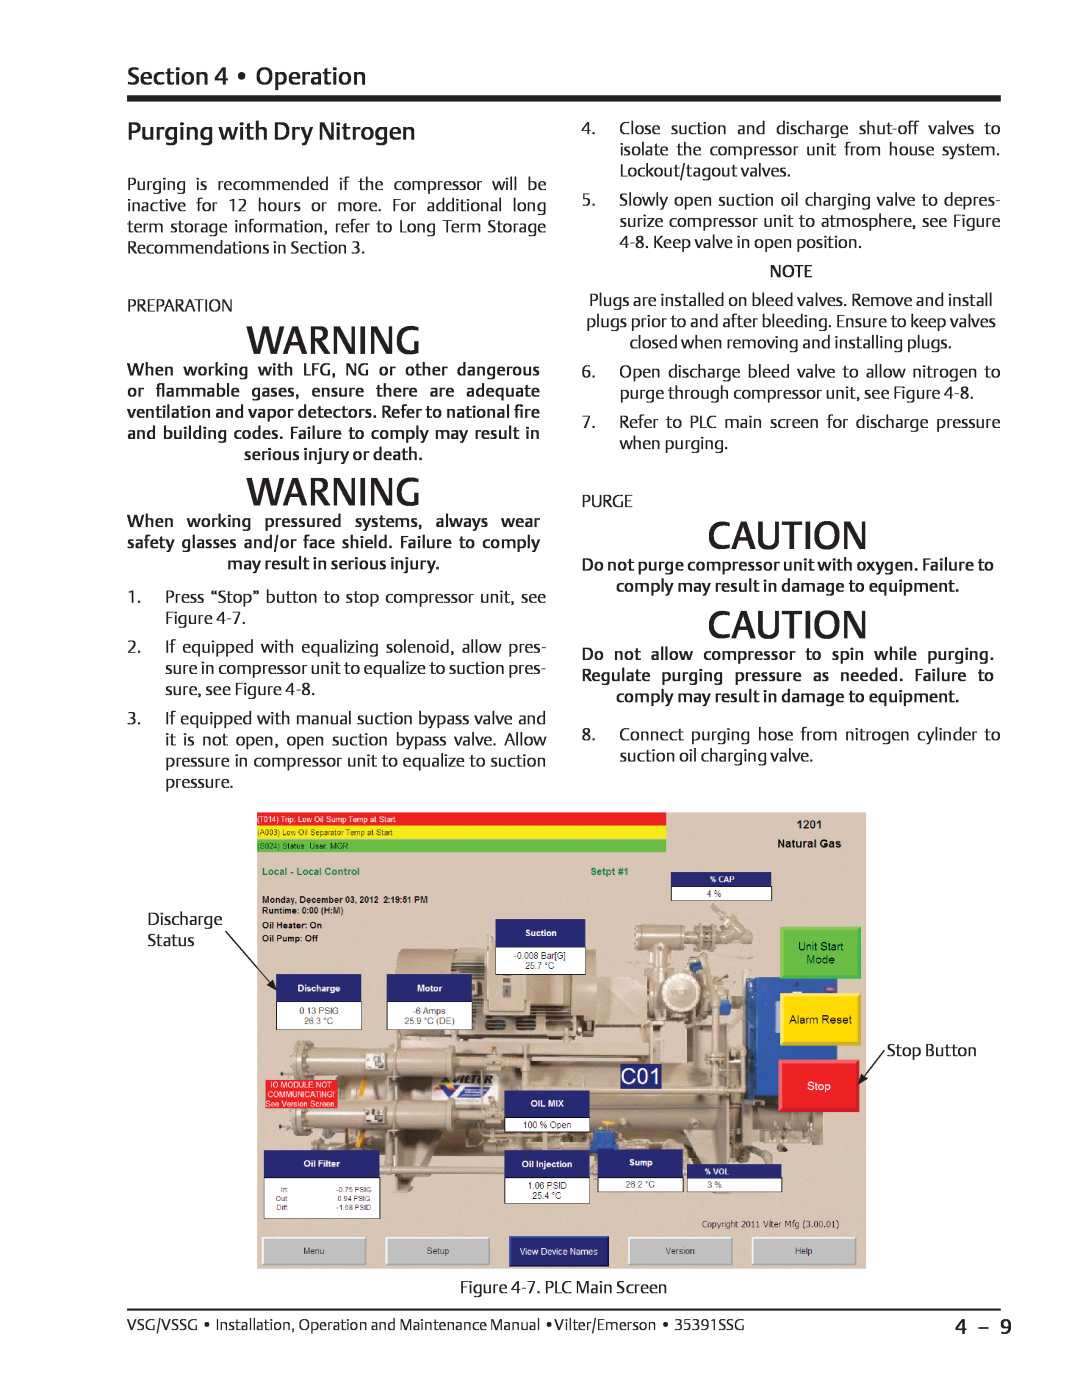 Emerson VSG, VSSG manual Purging with Dry Nitrogen, Operation 